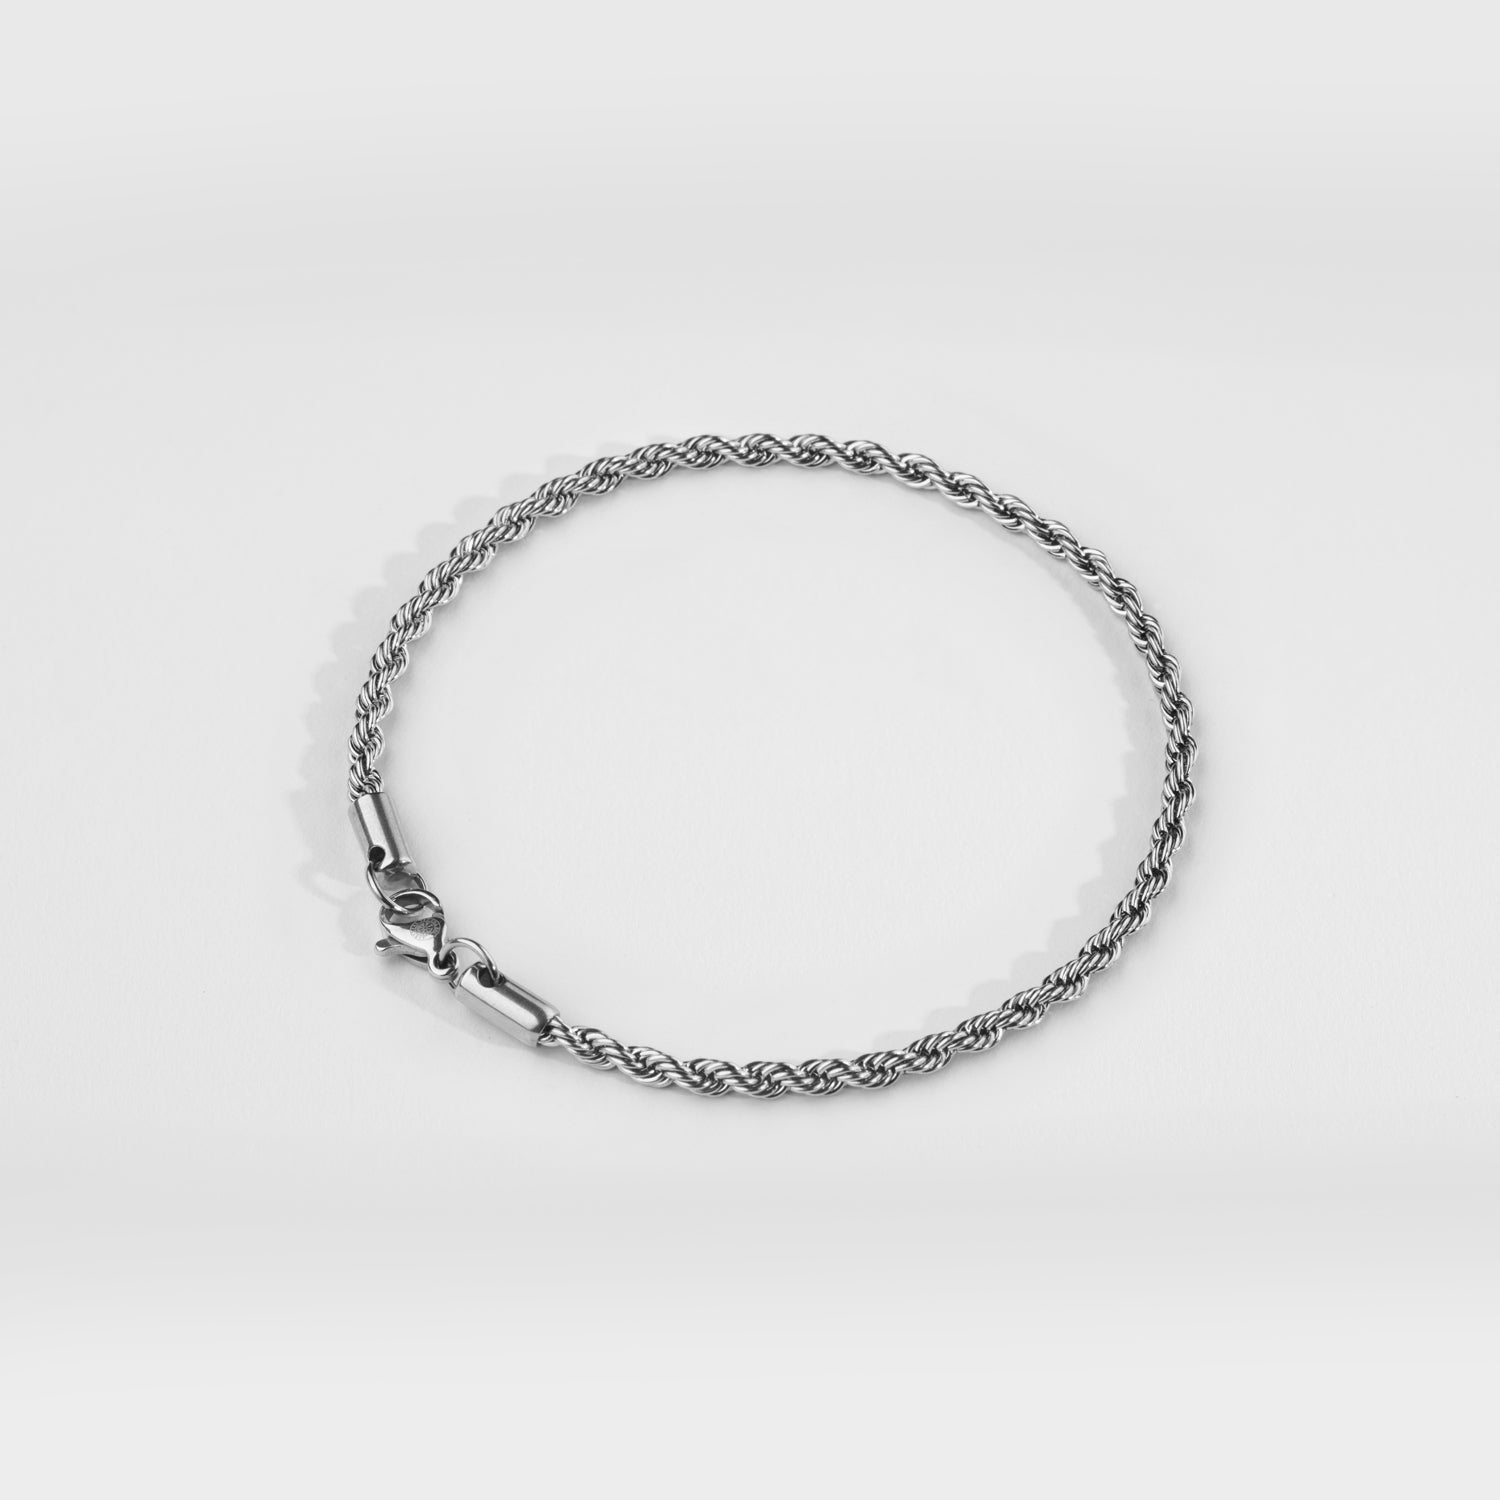 Rope bracelet - Silver-toned